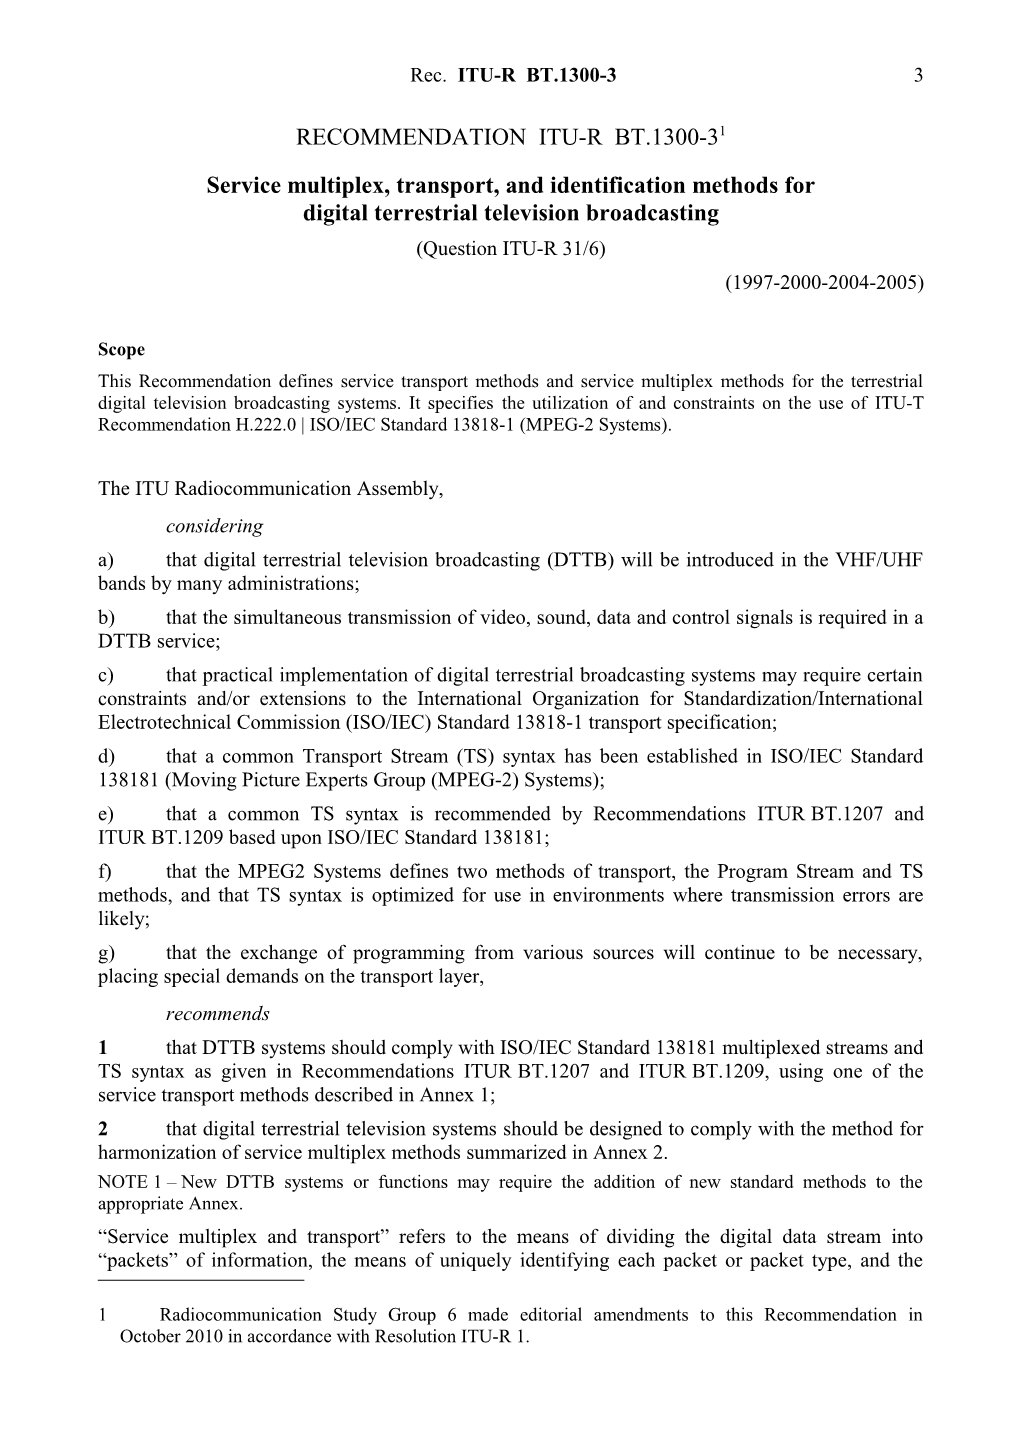 RECOMMENDATION ITU-R BT.1300-3 - Service Multiplex, Transport, and Identification Methods